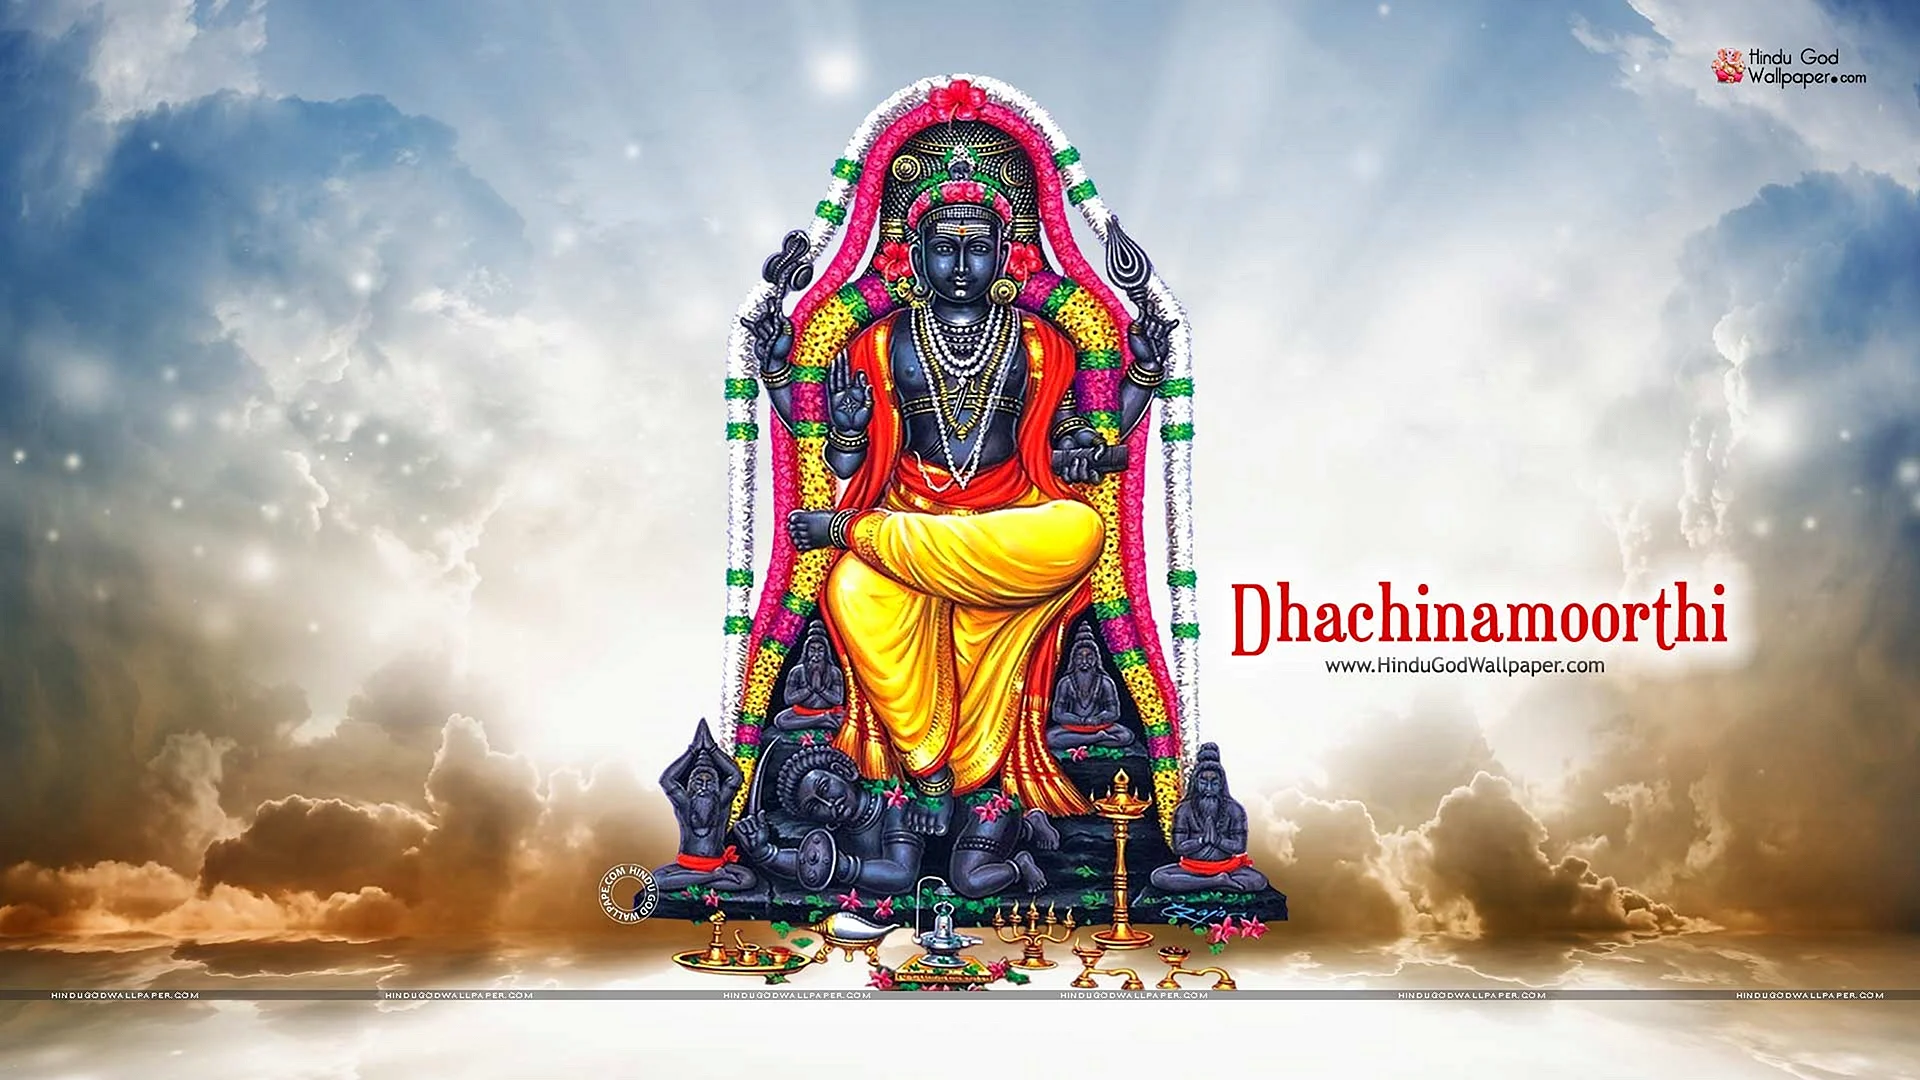 Hindu God Dhachinamoorthi Wallpaper